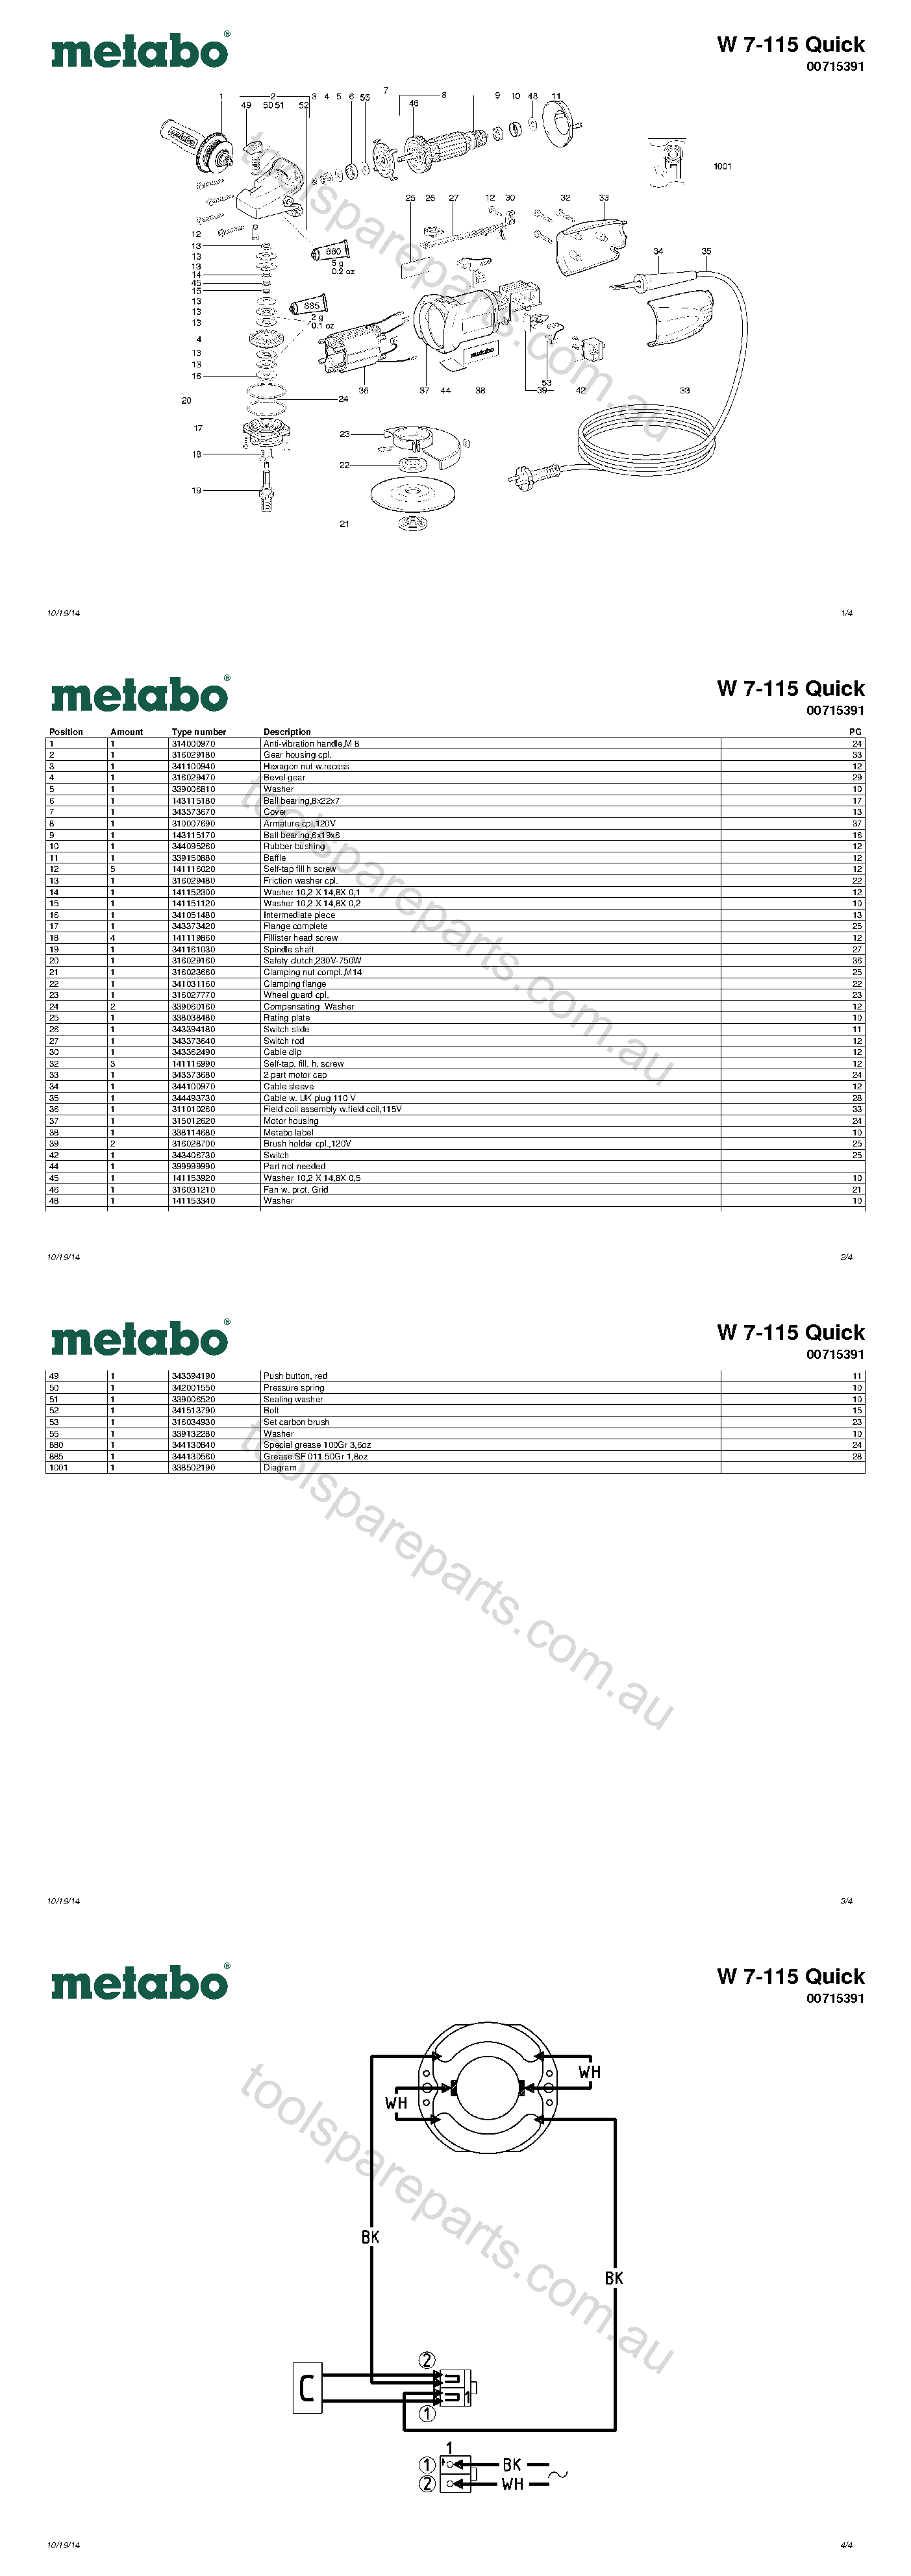 Metabo W 7-115 Quick 00715391  Diagram 1